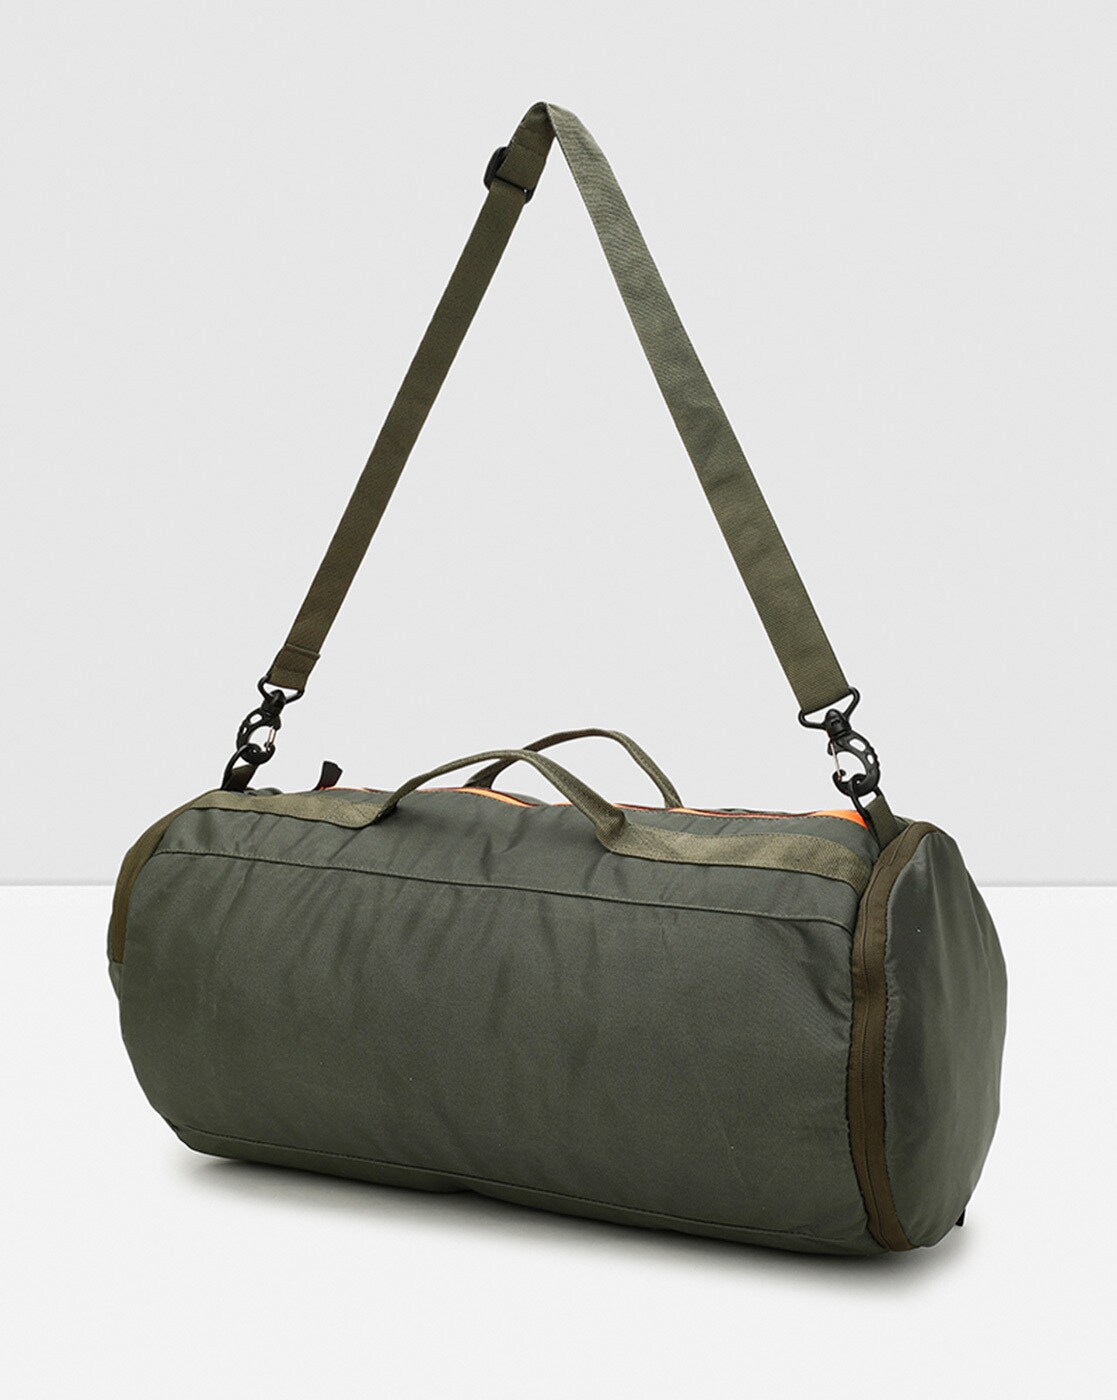 Fur Jaden Military Green Canvas 40L Duffle Travel Bag – Fur Jaden